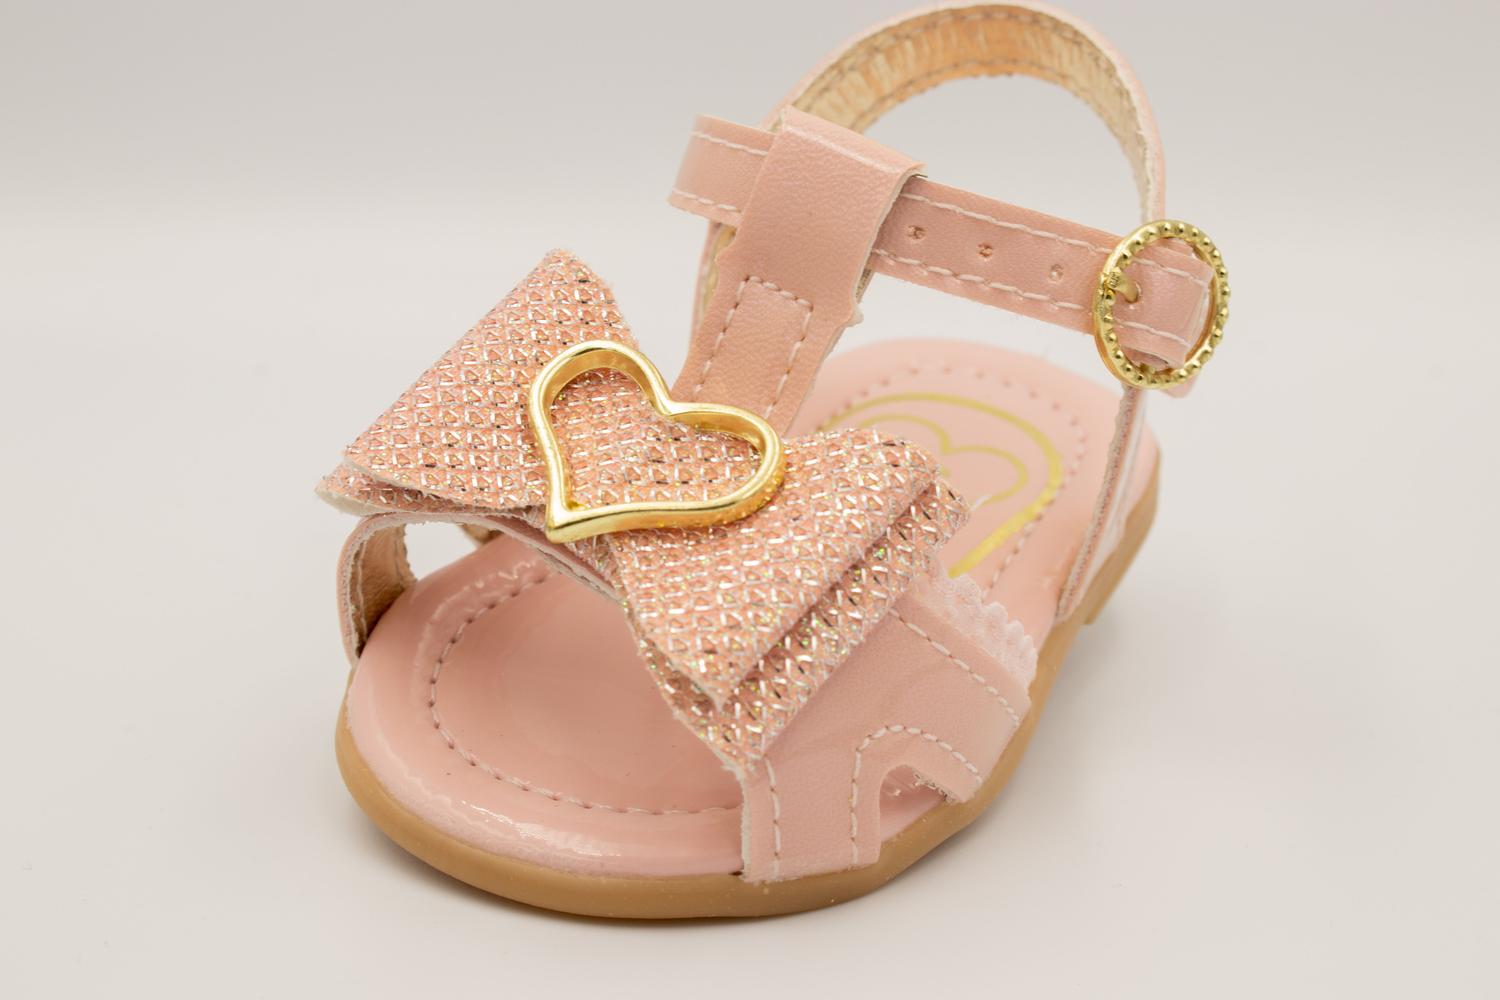 sandália infantil rosa